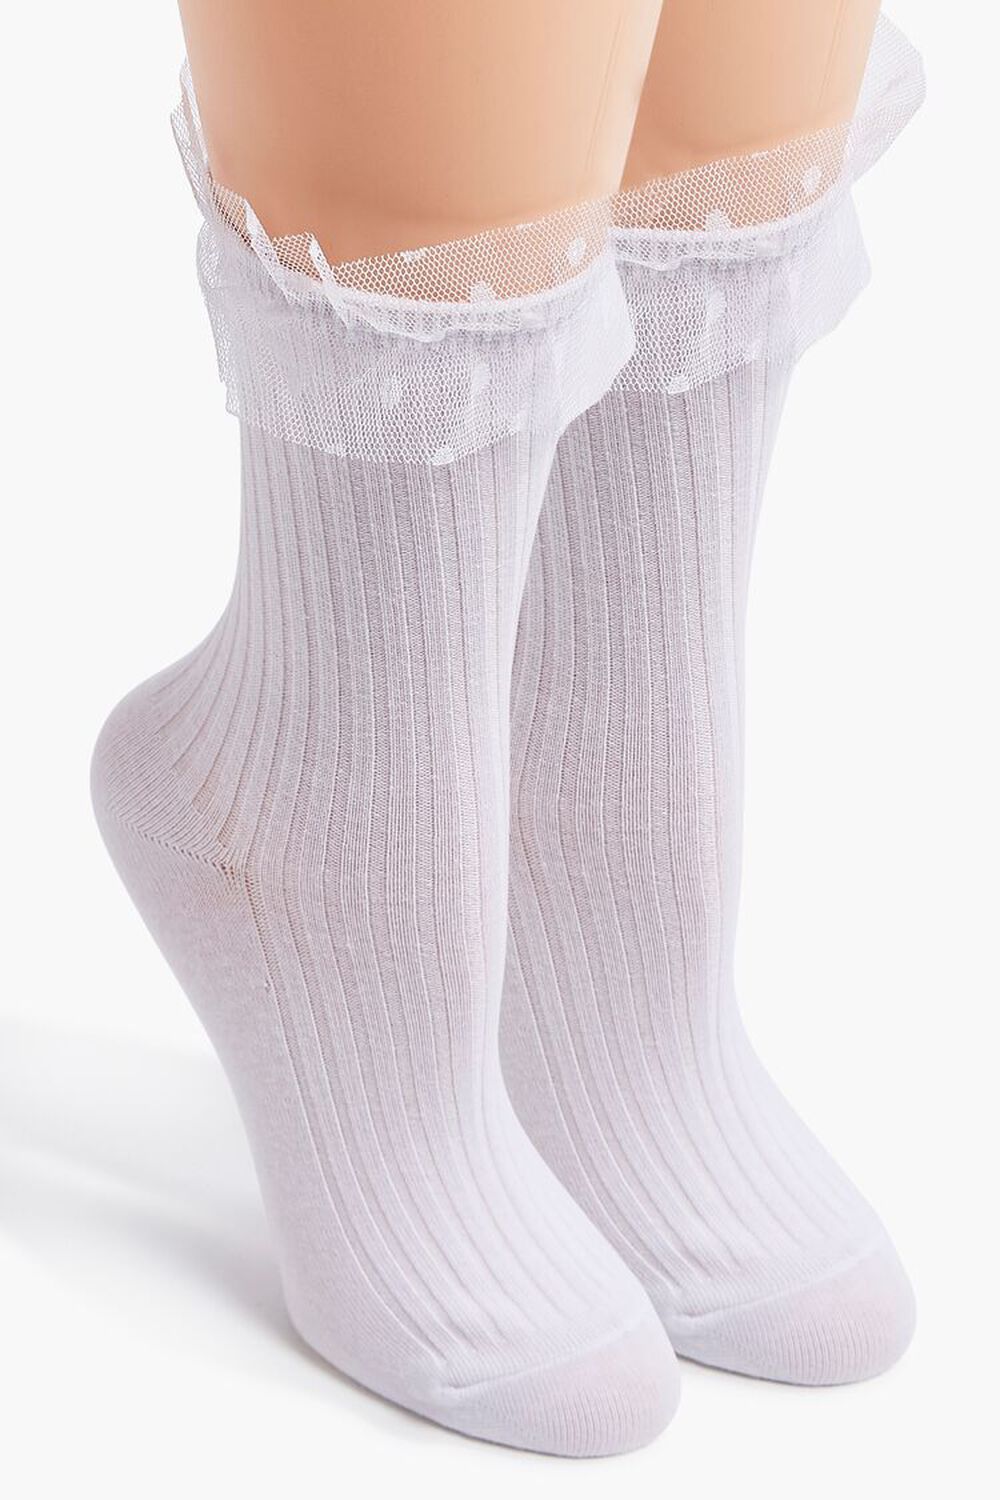 WHITE Polka Dot Lace-Trim Crew Socks, image 1